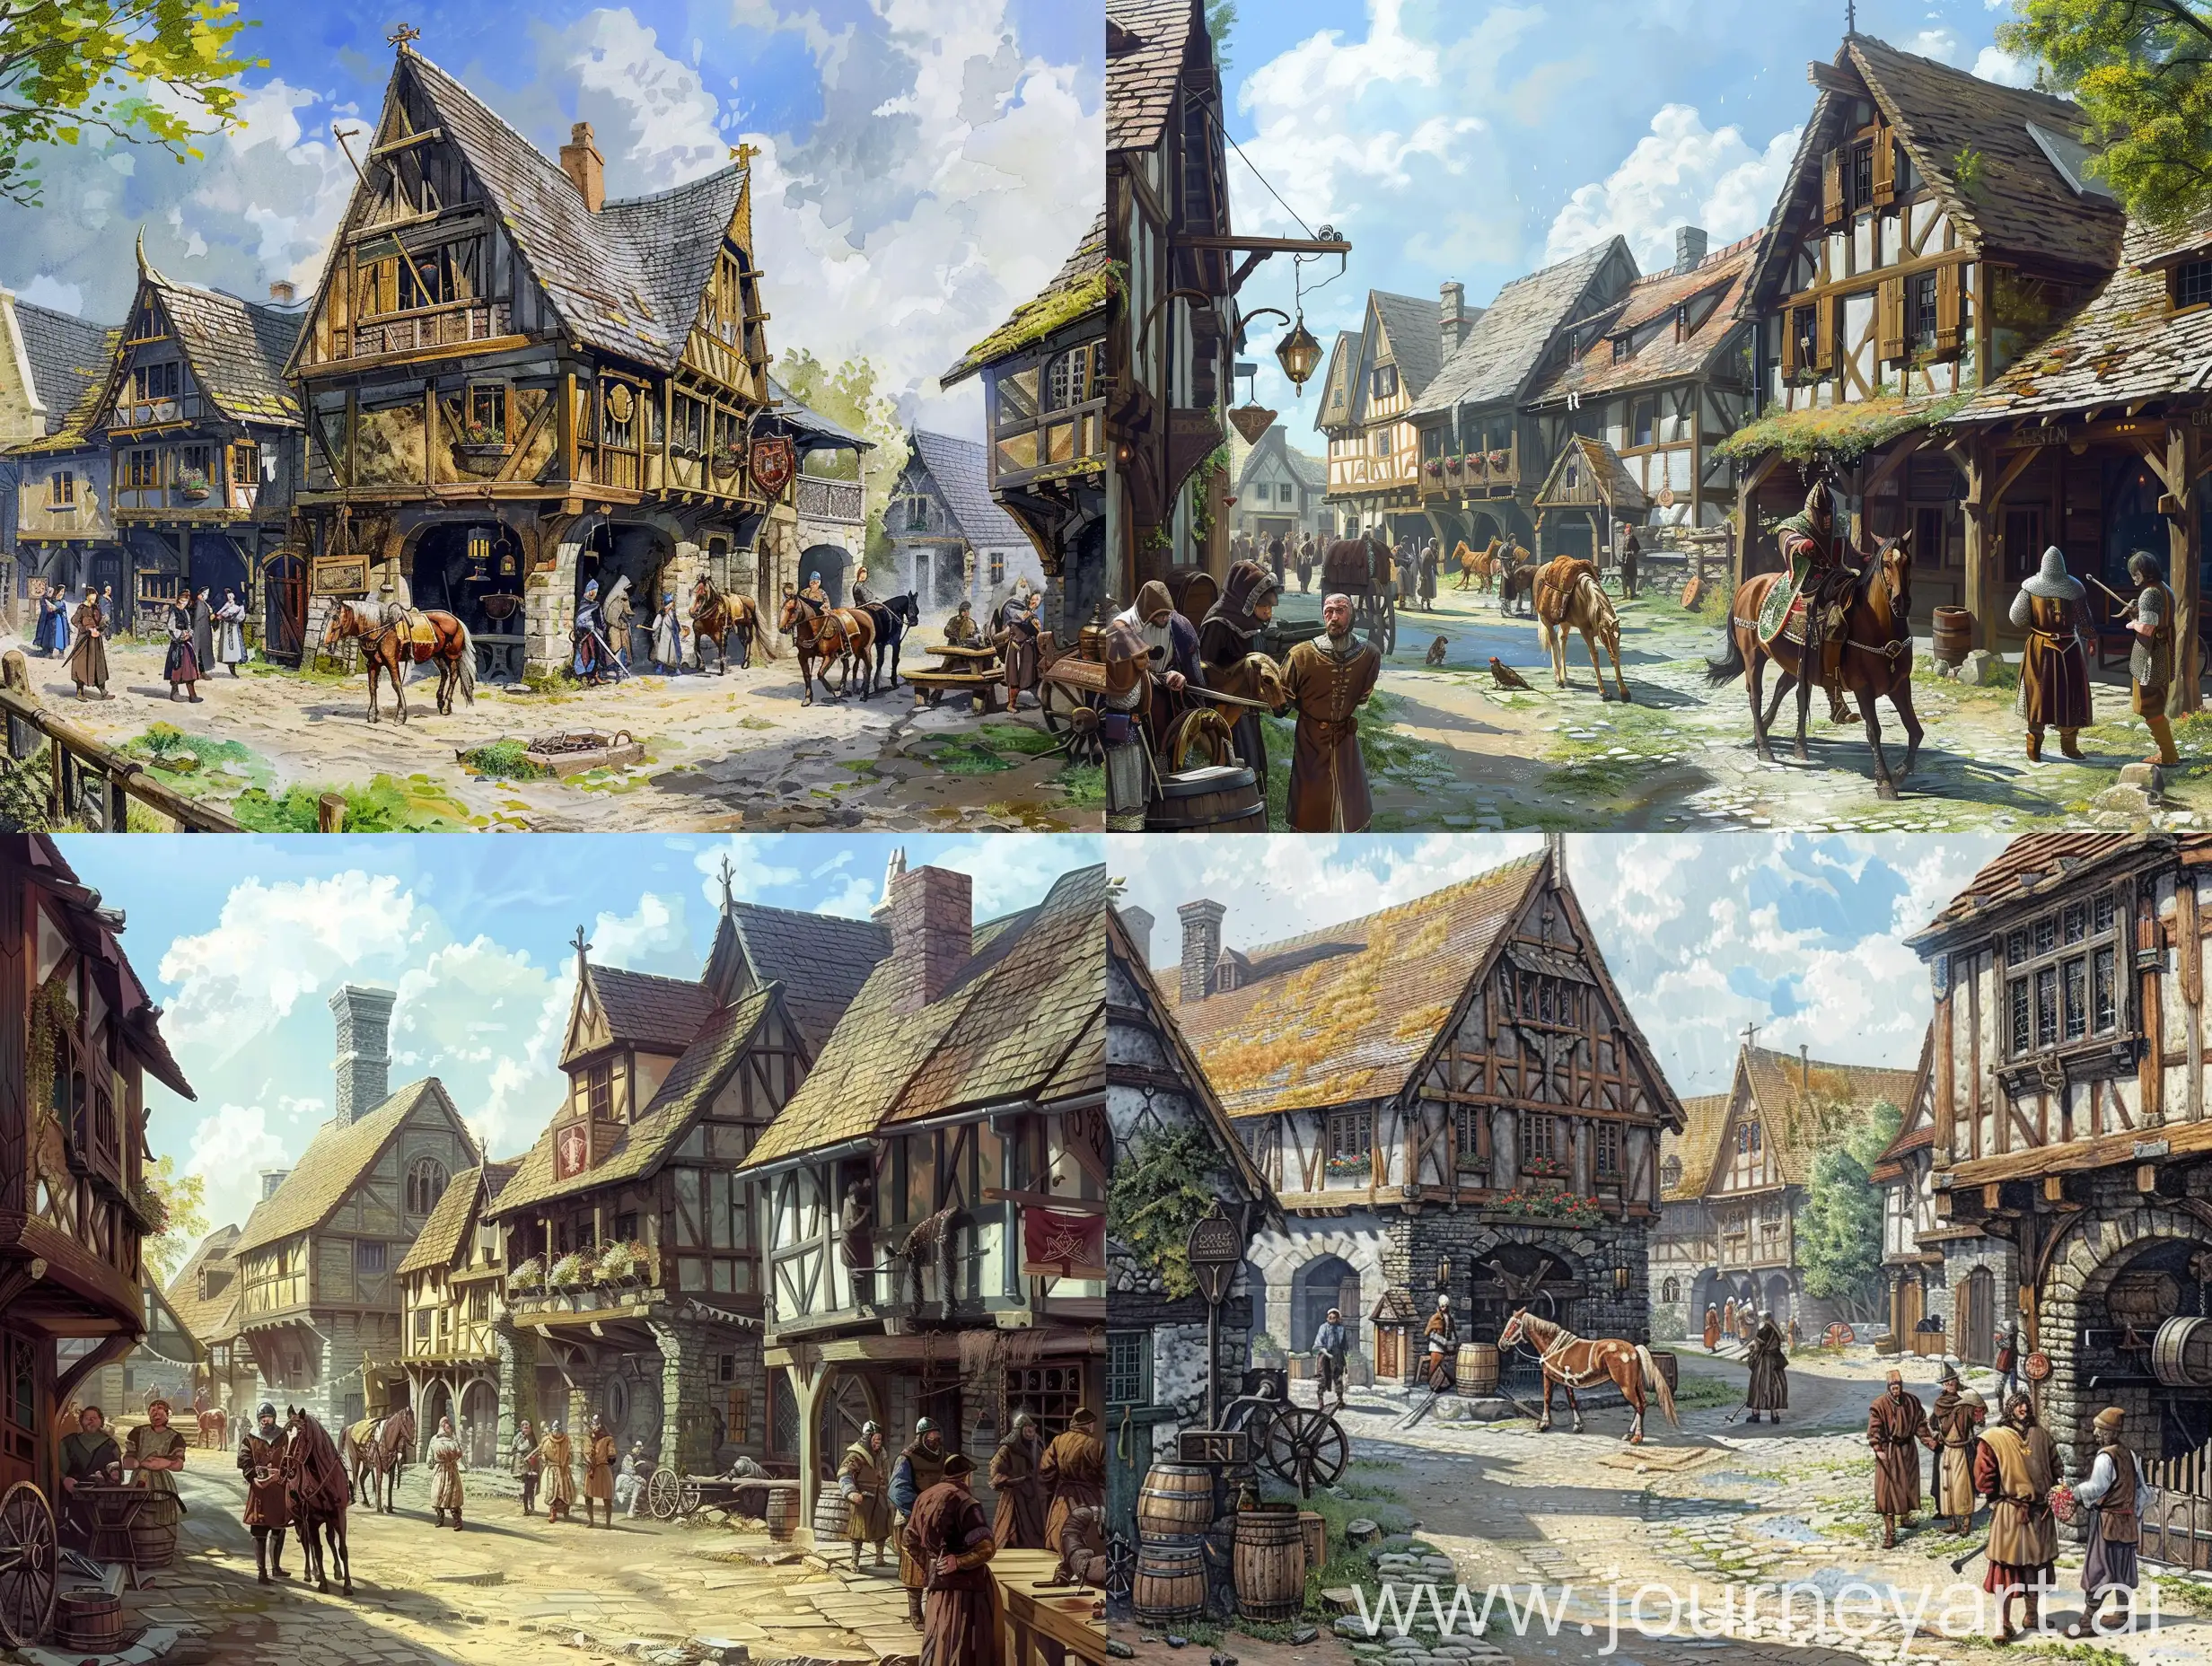 Medieval village, Medieval street, tavern, half timbered houses, inn, people at street, blacksmith, horses,